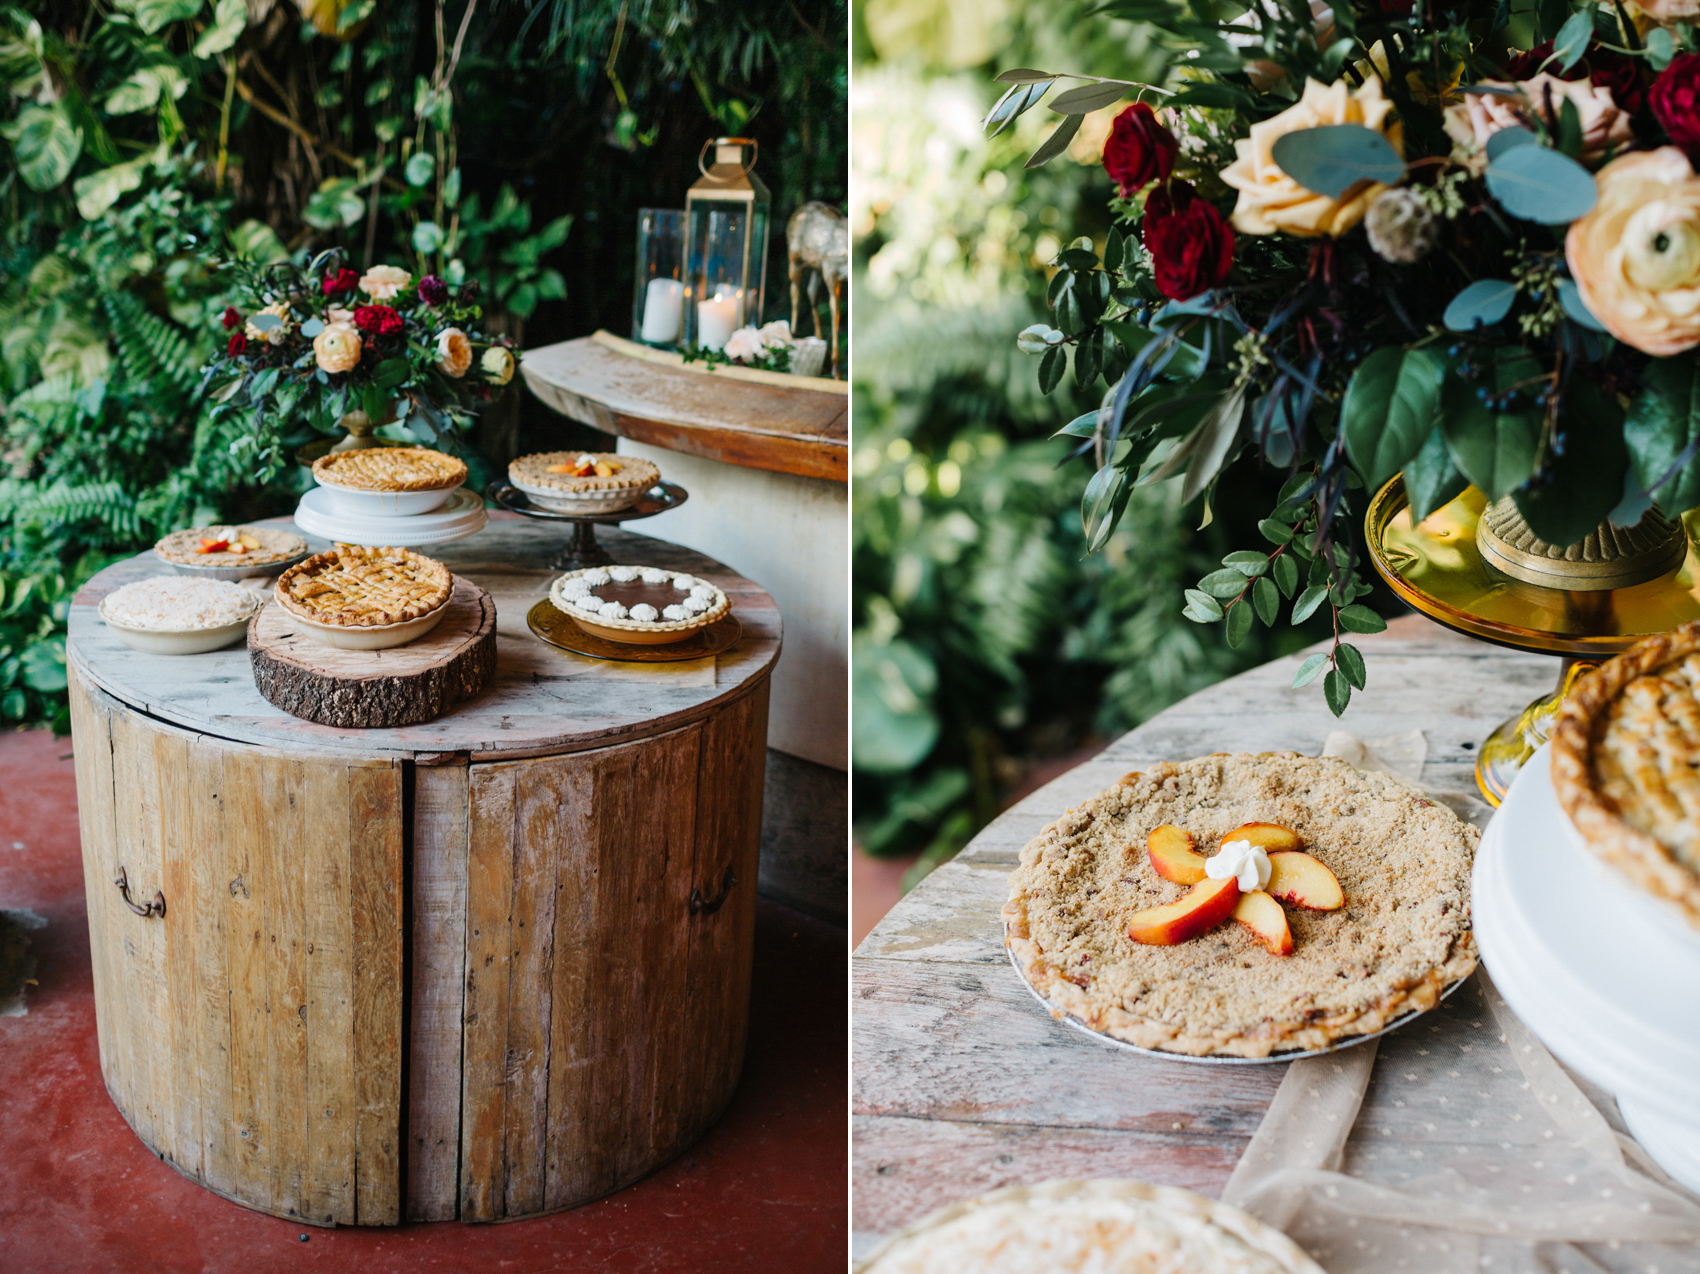 Mismatched Pie dessert bar by J’aime Cakes for outdoor garden wedding in Orlando, Florida